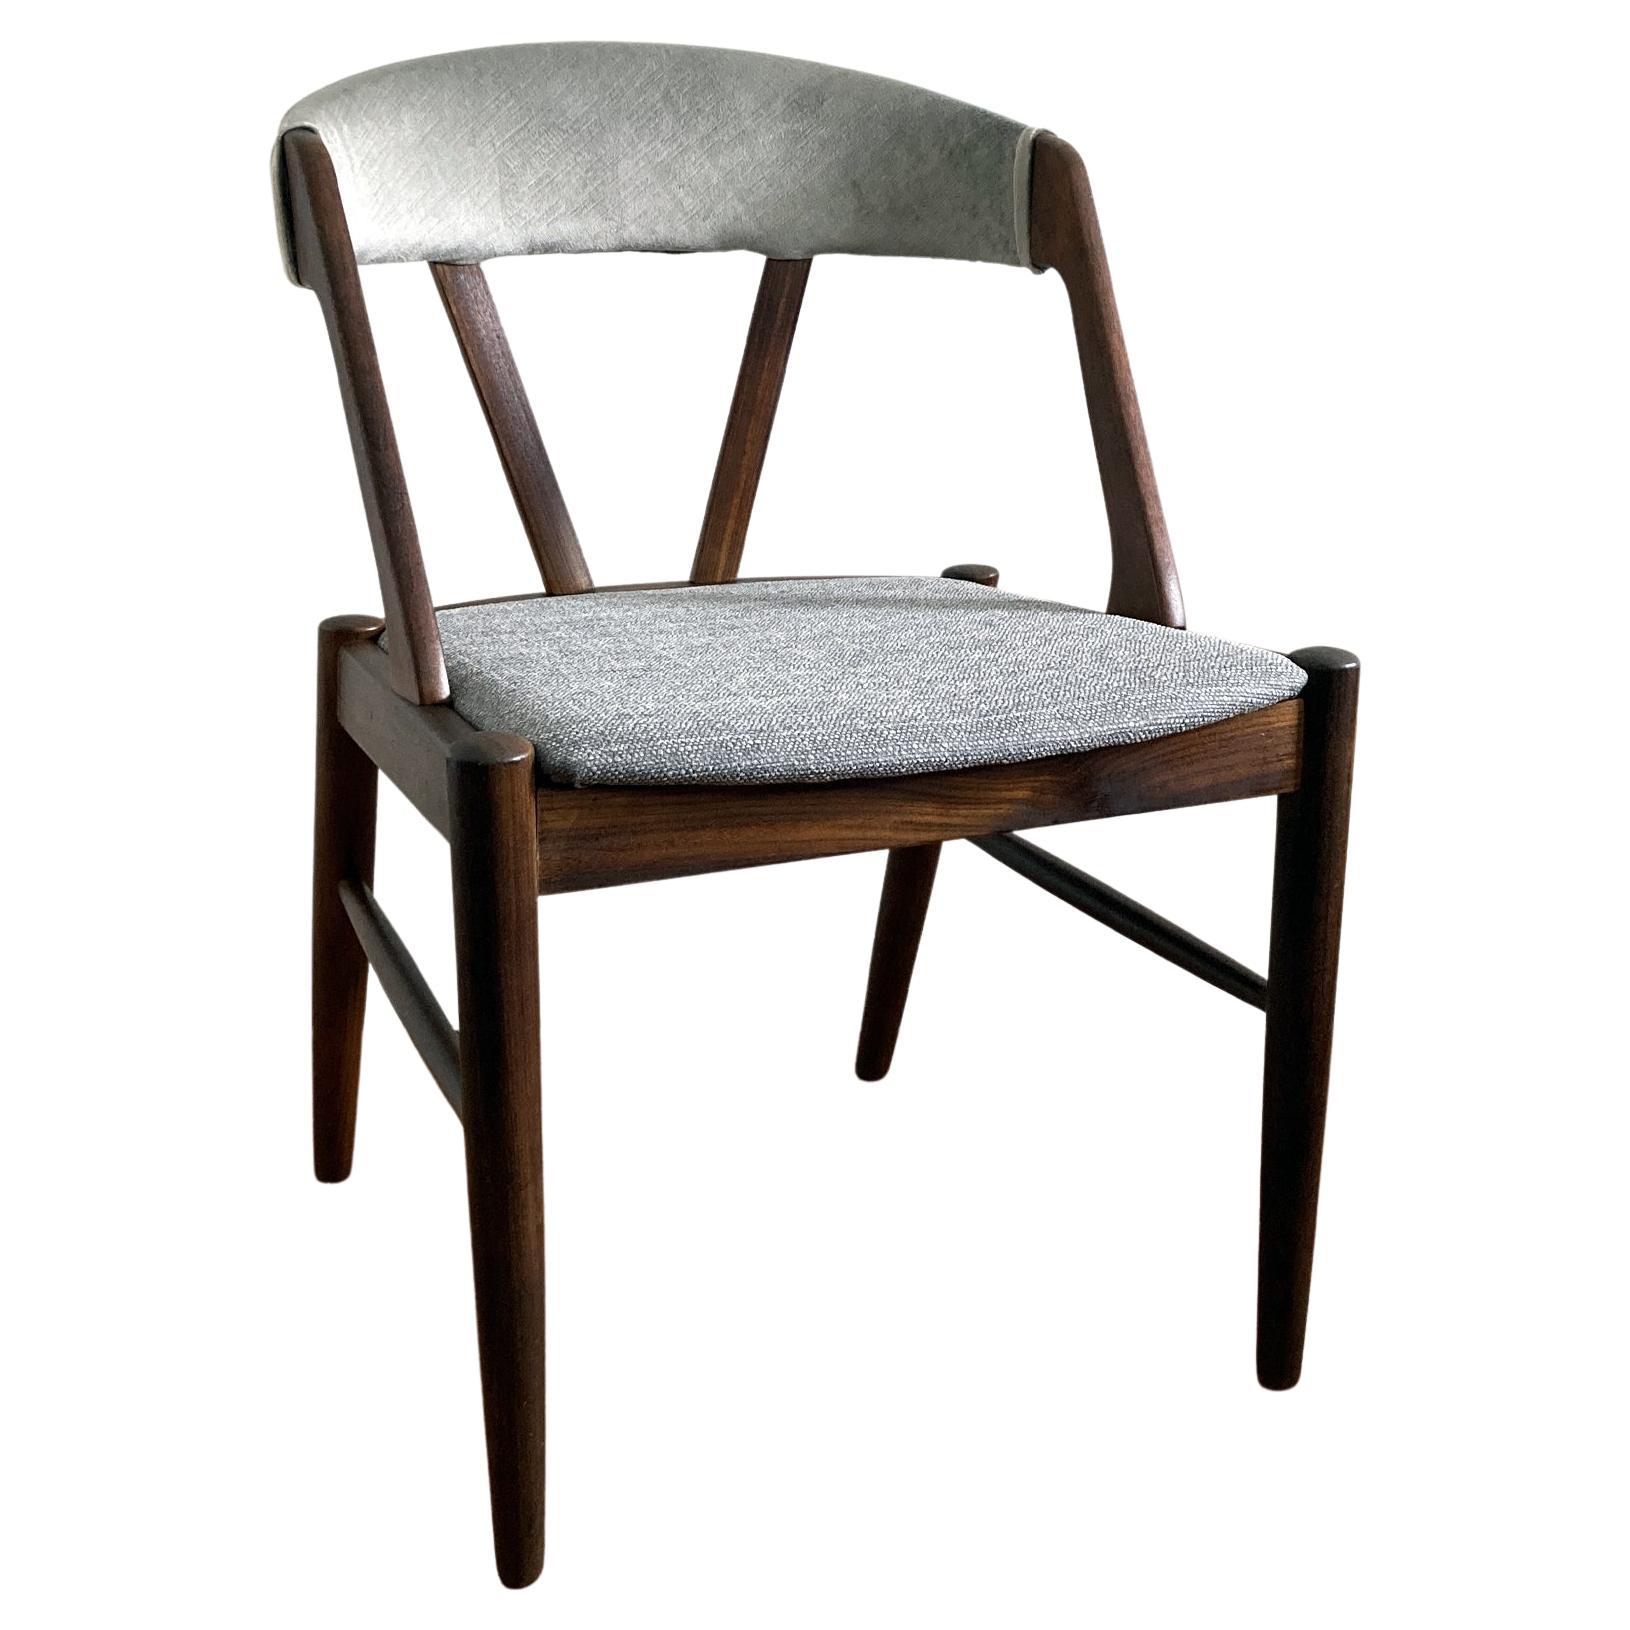 Kai Kristiansen Style Reupholstered Curved Back Gray Teak Chair, Danish, 1960s For Sale